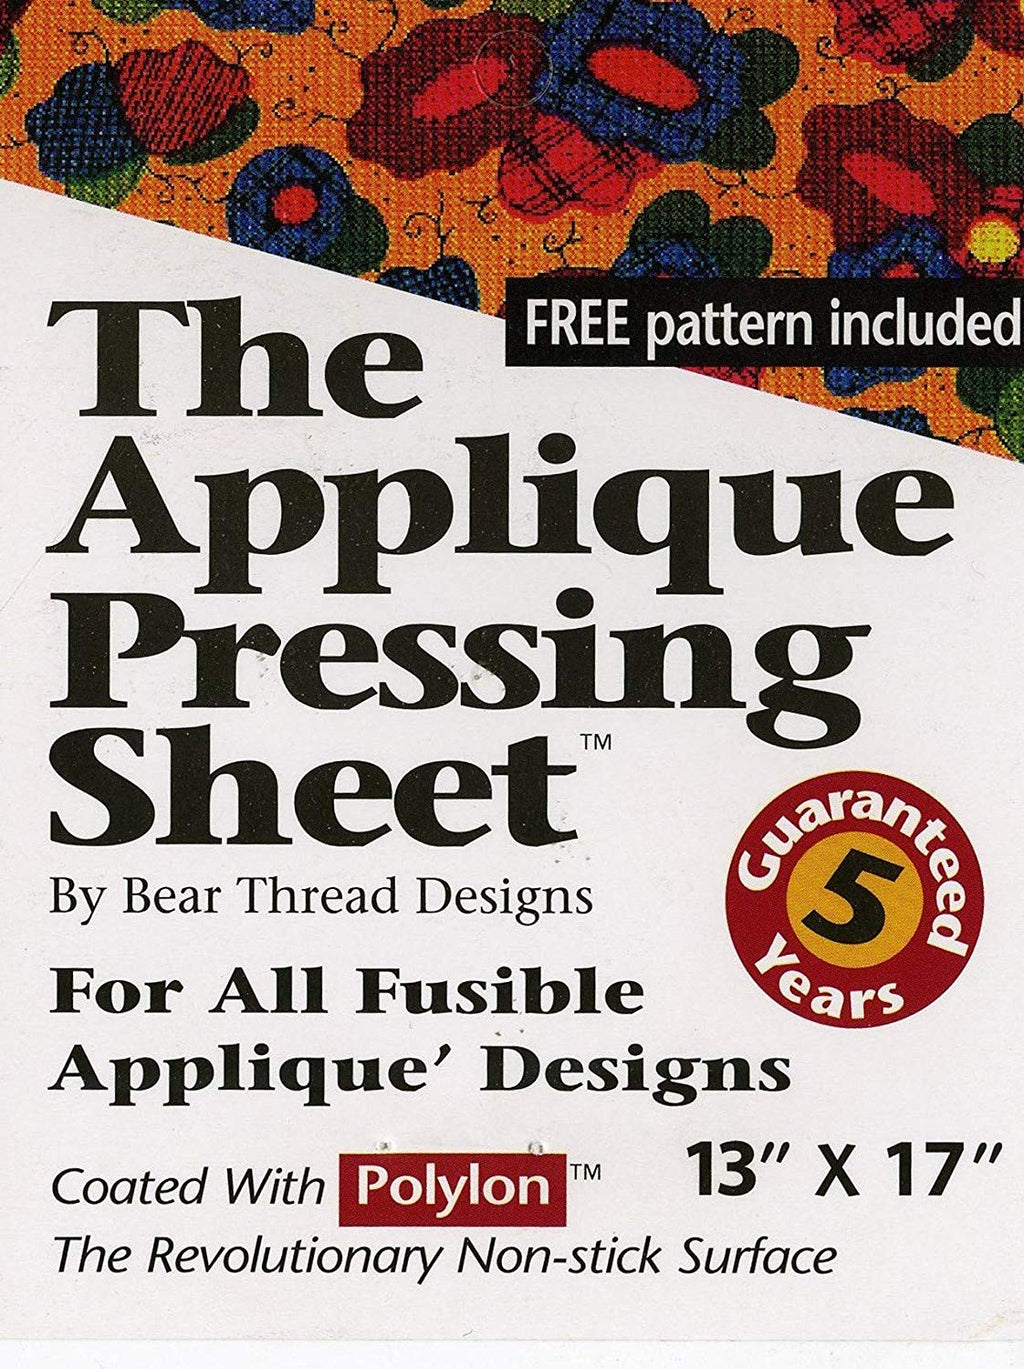 Brewer Sewing - Applique Pressing Sheet 13inx17in